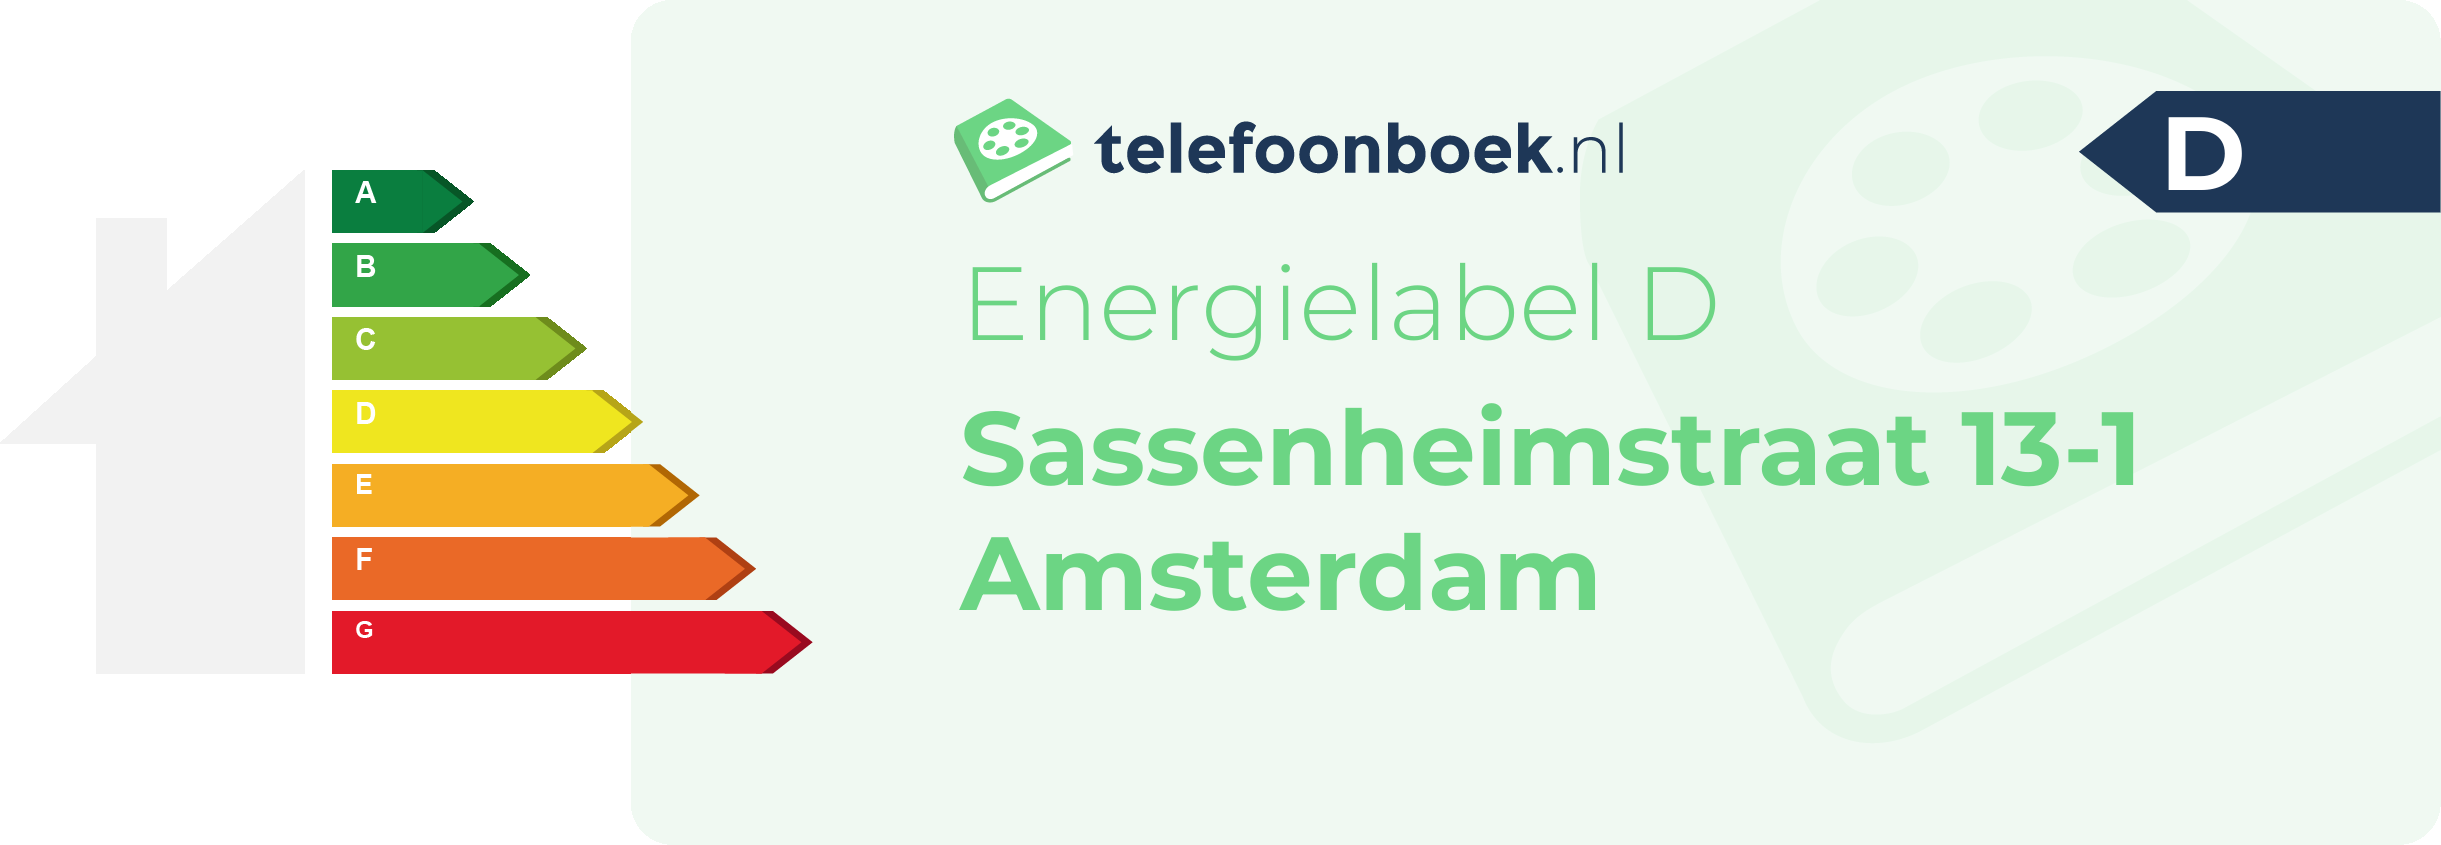 Energielabel Sassenheimstraat 13-1 Amsterdam